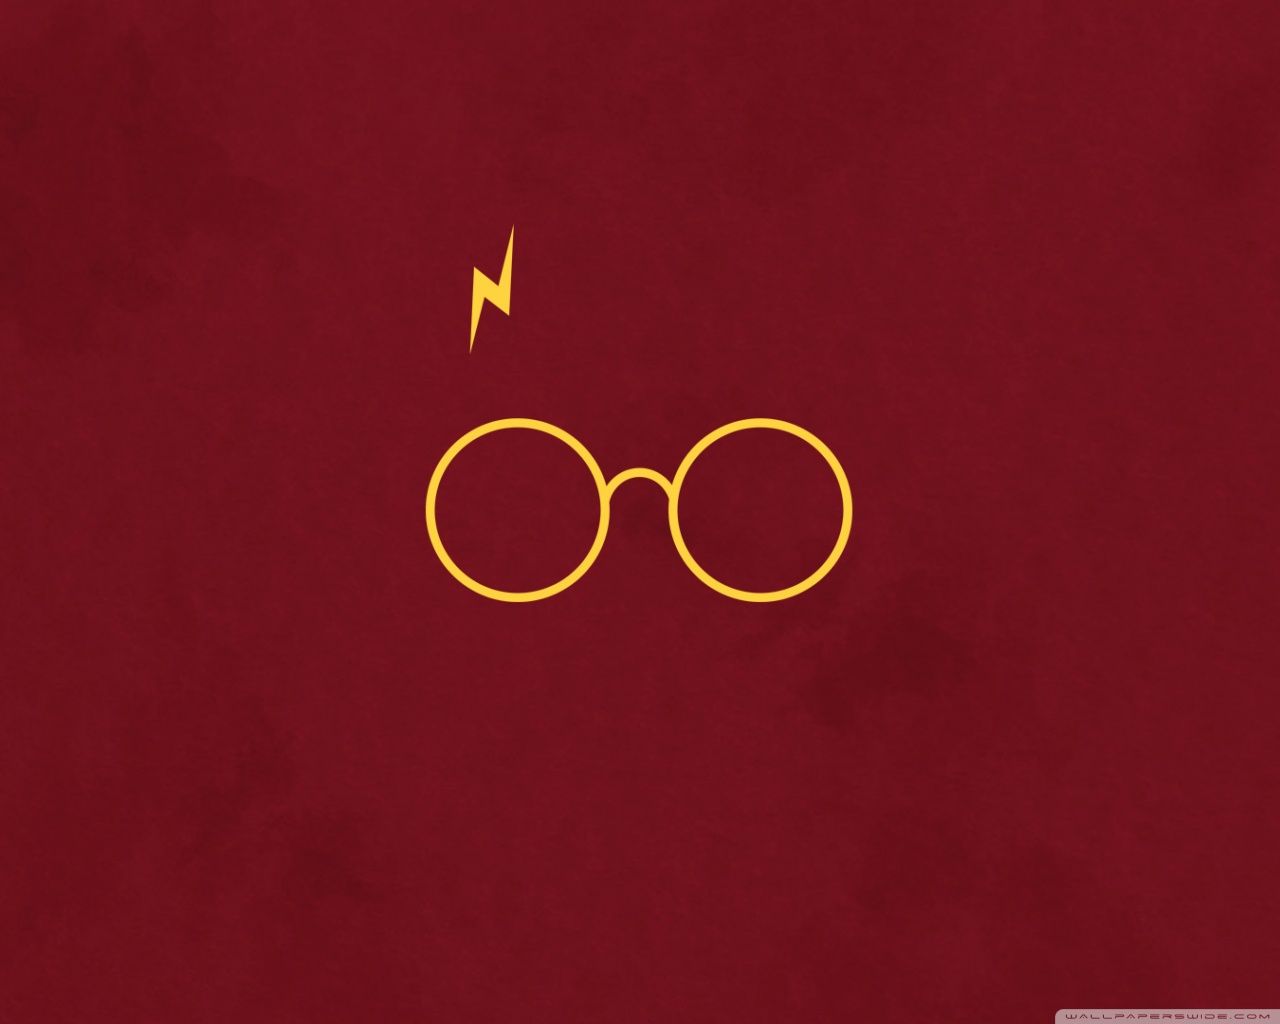 hogwarts logo wallpaper